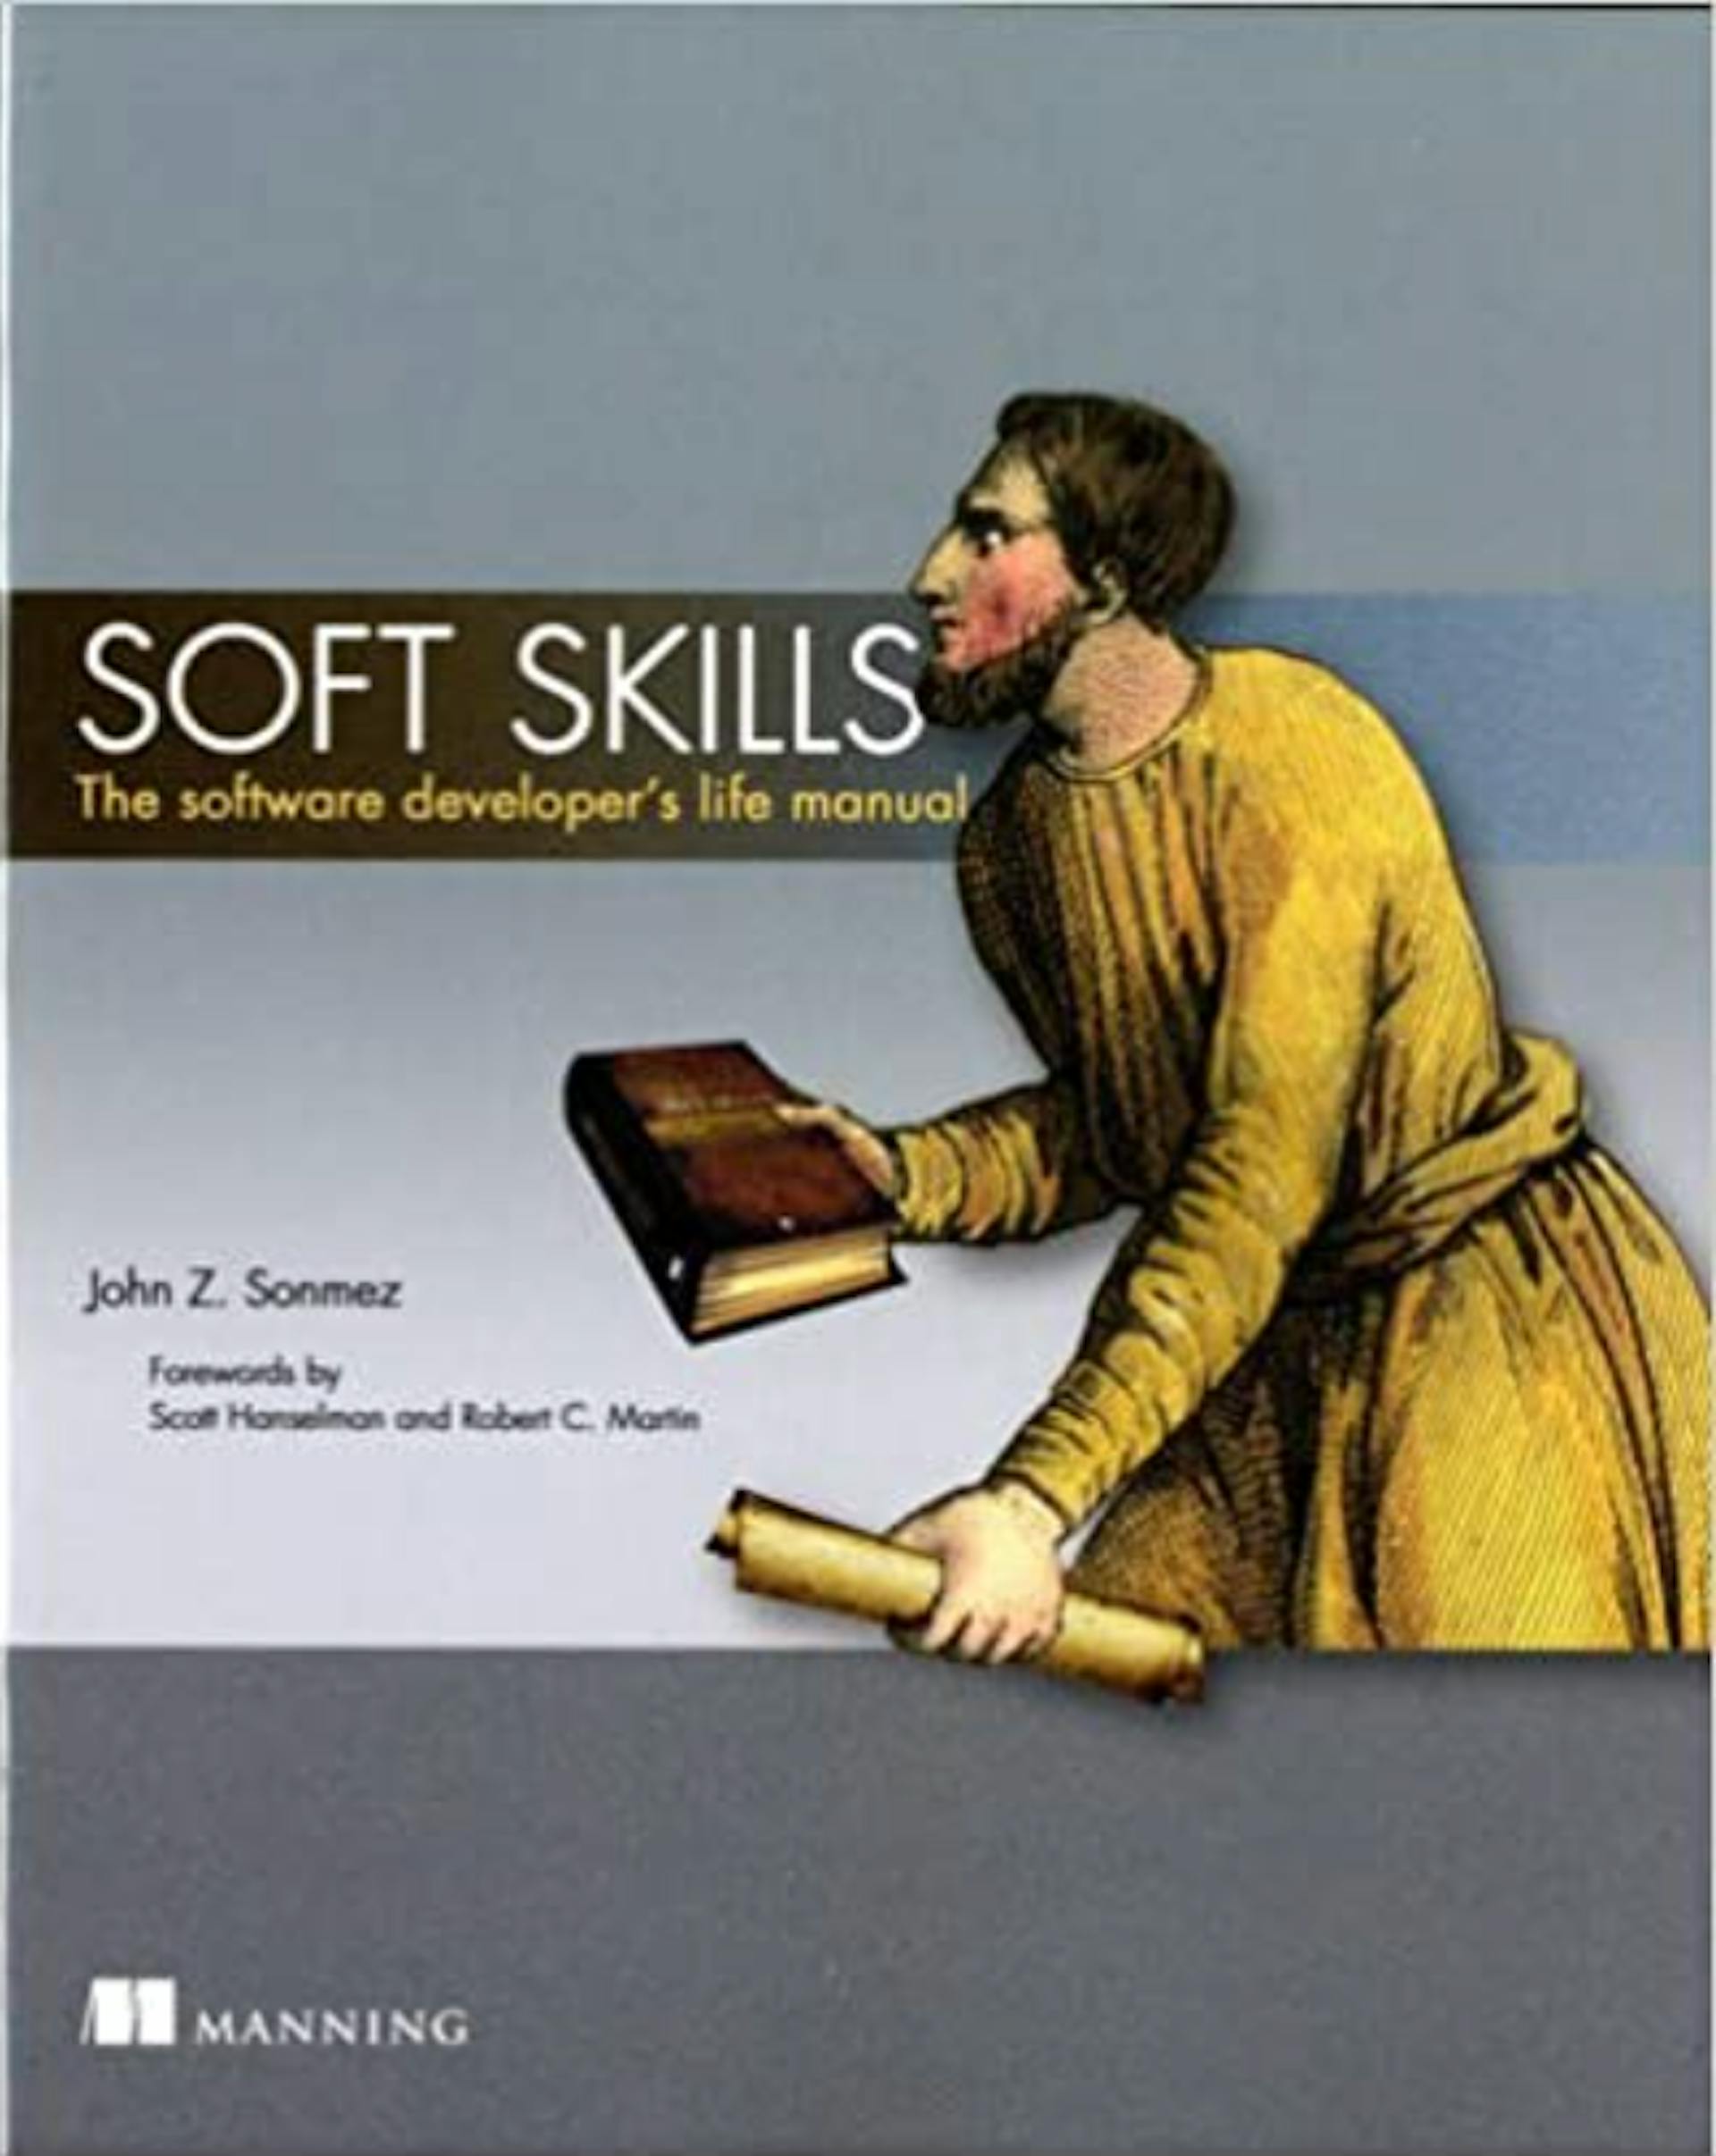 Soft Skills book